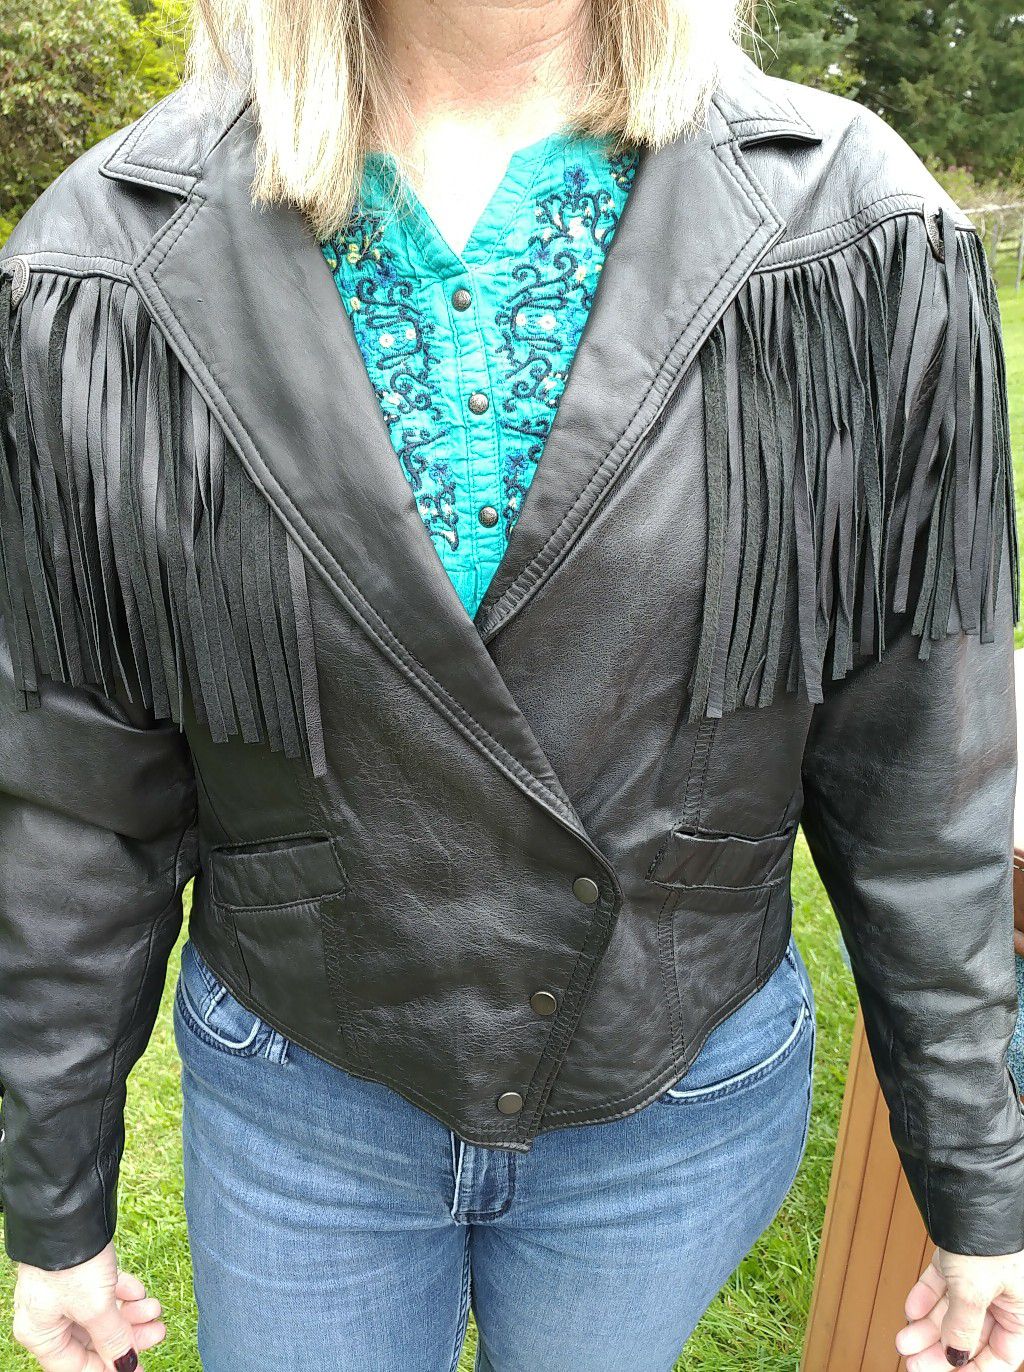 Women's black leather jacket